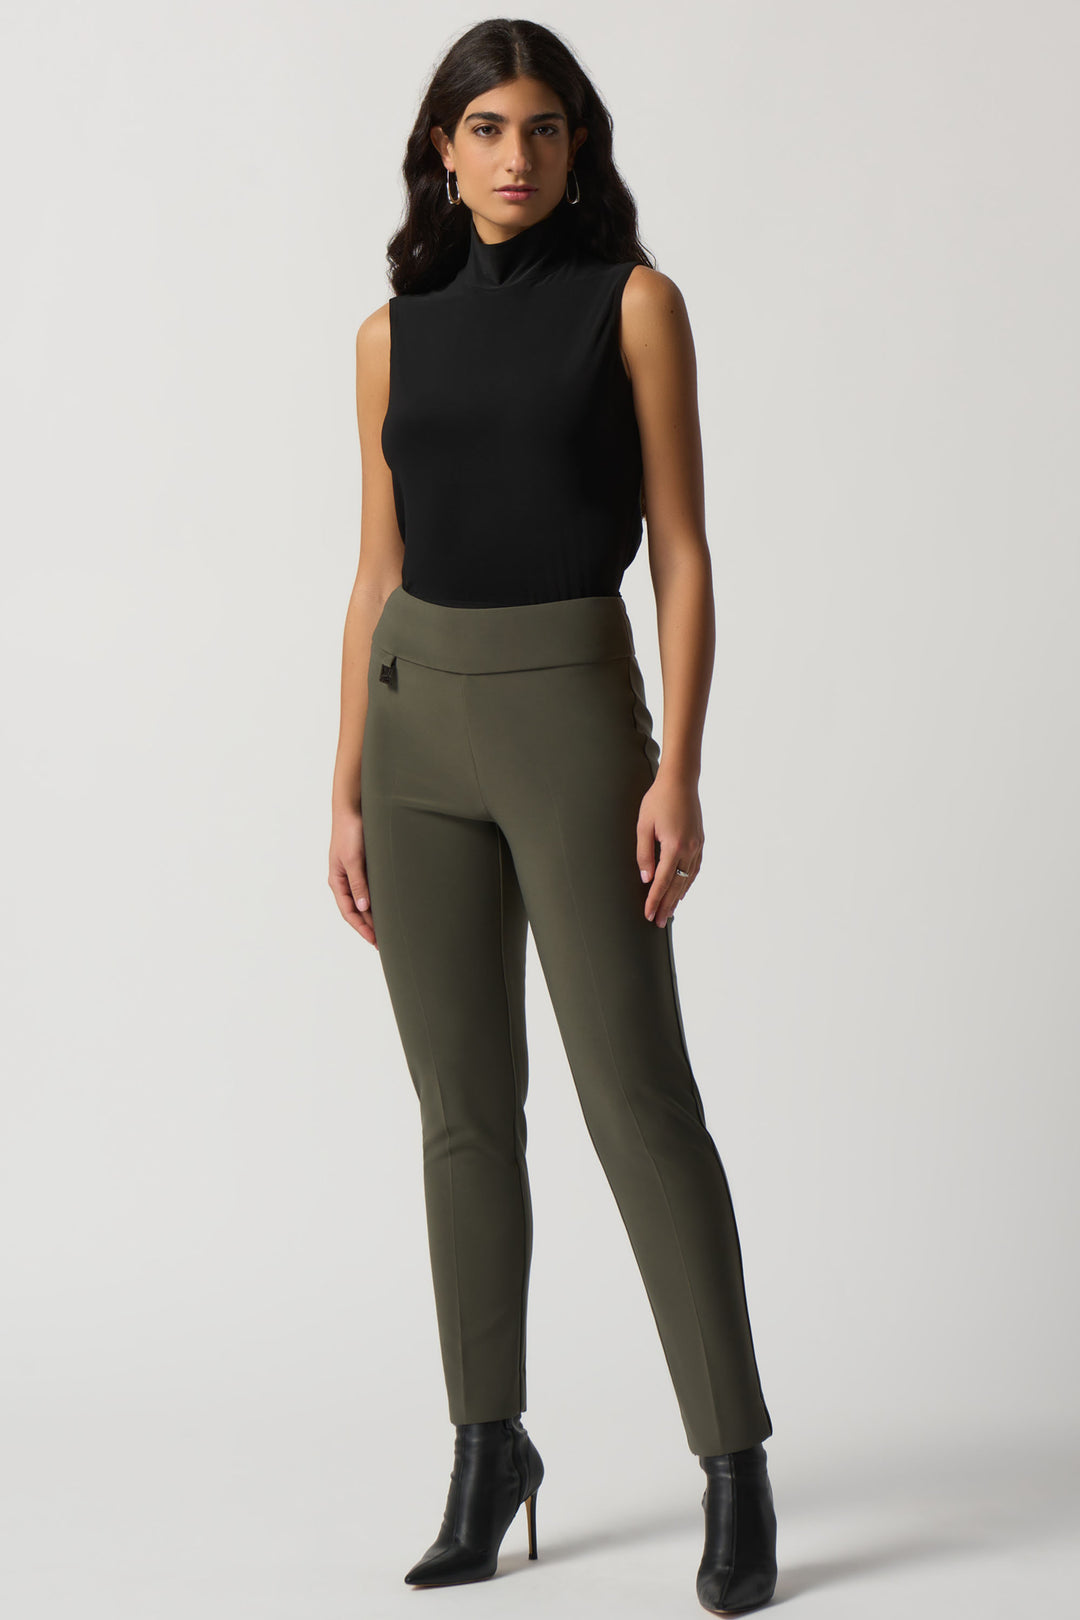 Joseph Ribkoff Fall 2023 women's business casual slim basic dress pant - avocado model